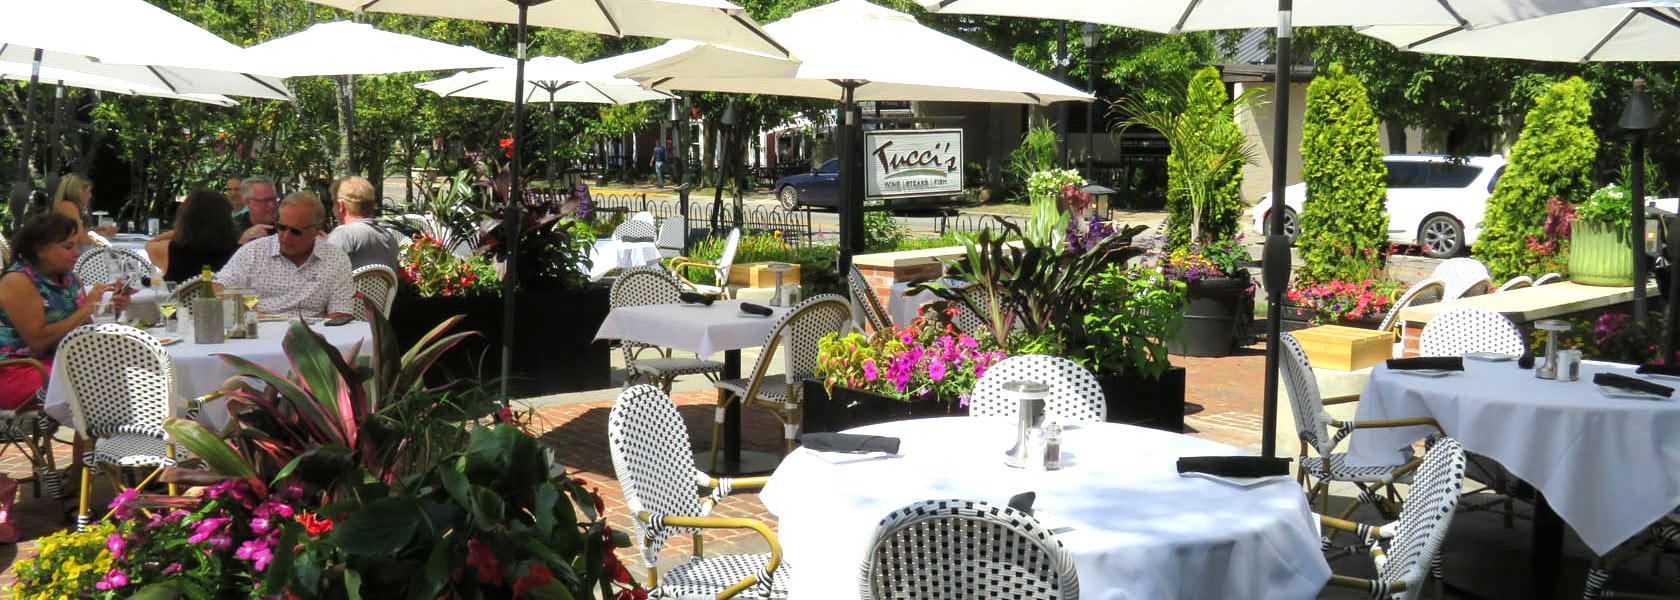 Patio dining at Tucci's in Dublin, Ohio - white umbrellas and lush foliage surround guests.